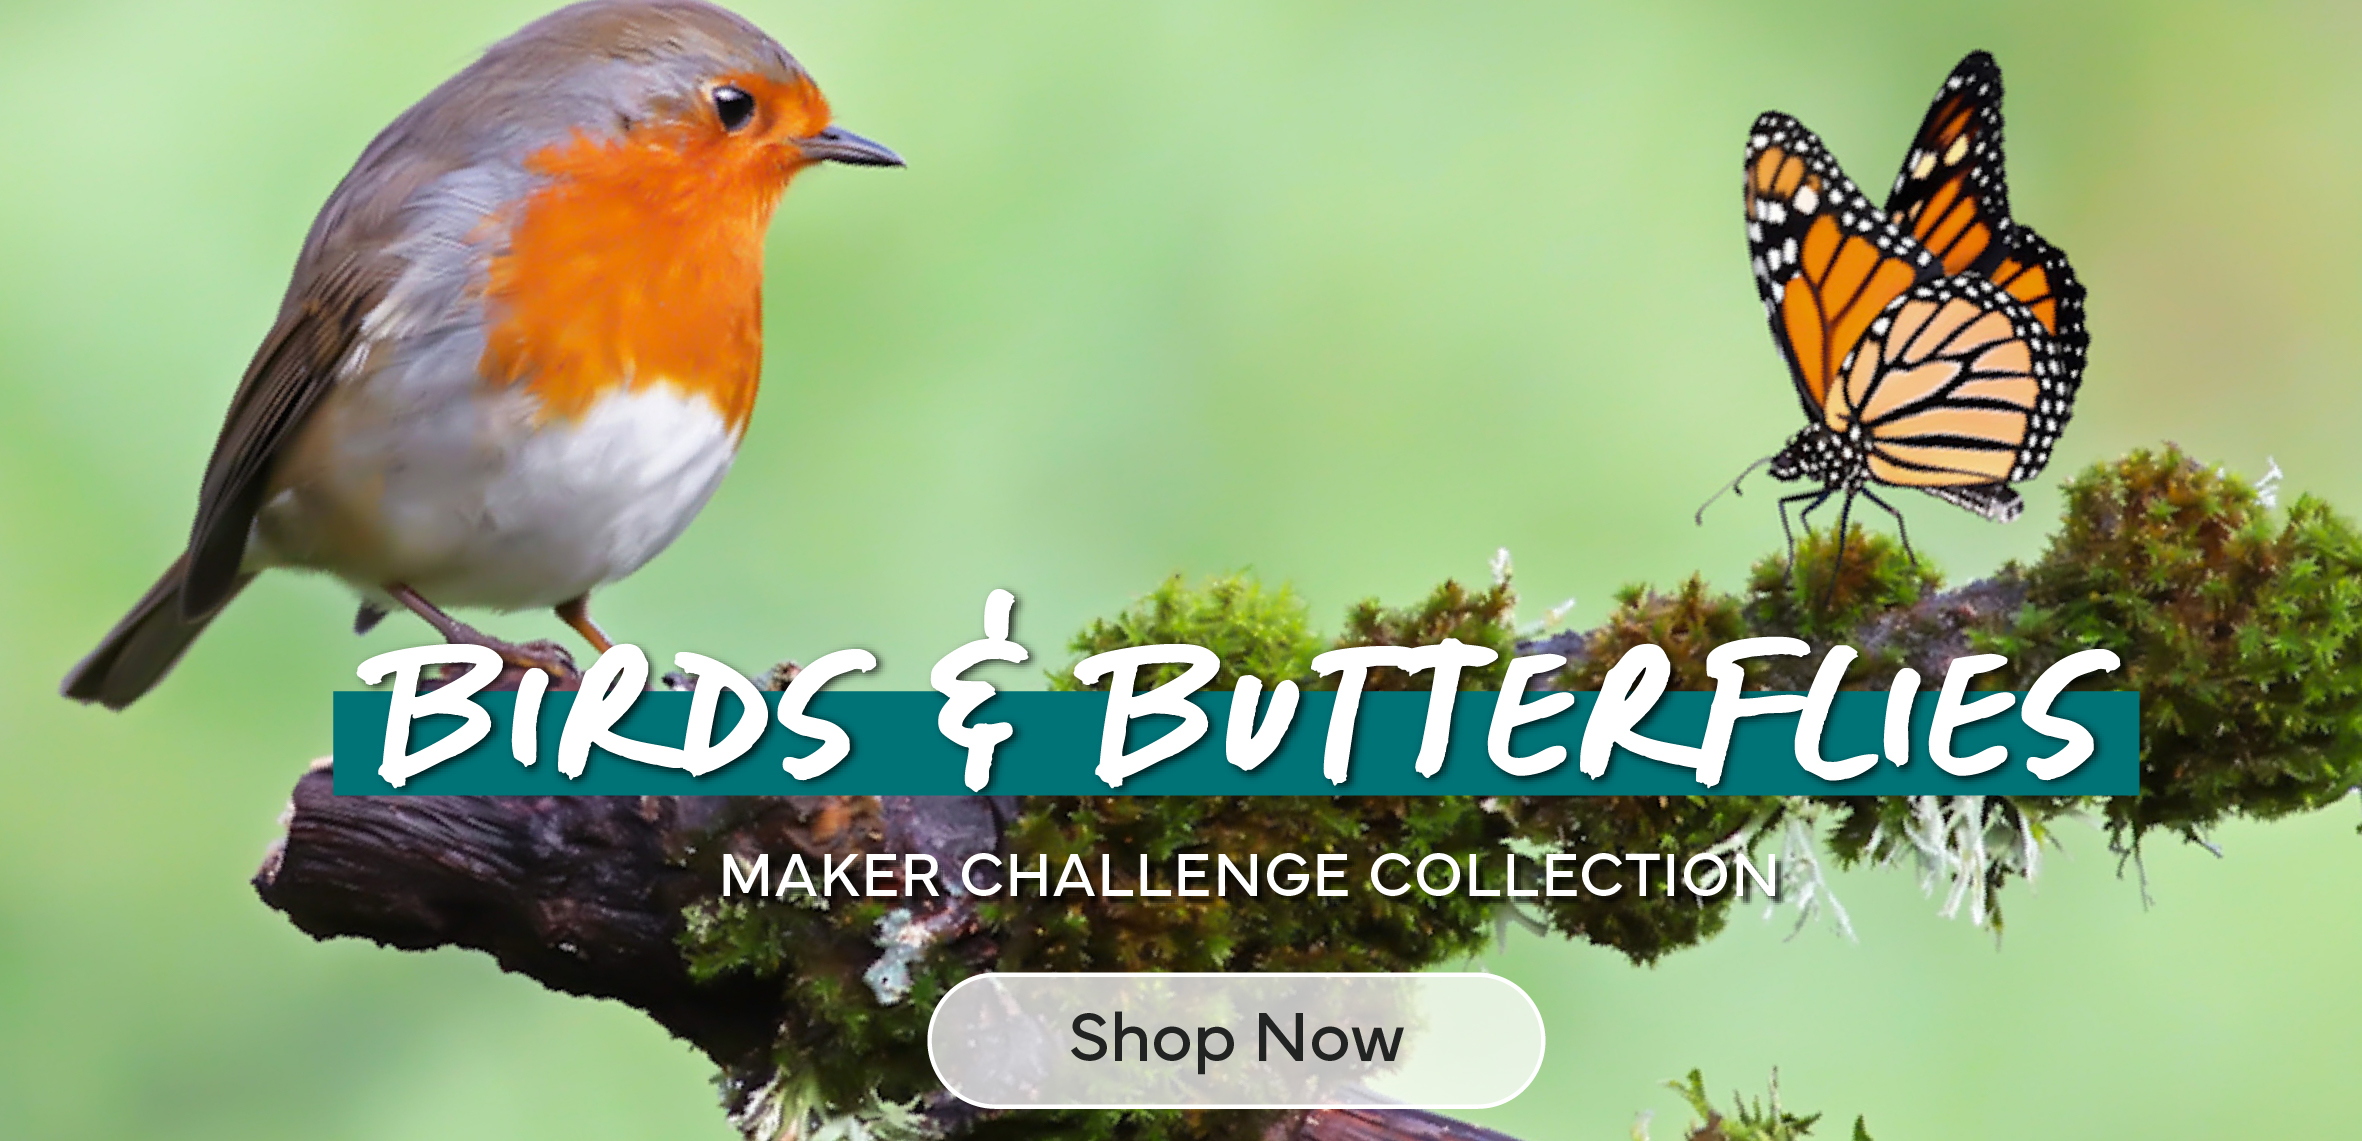 Birds & Butterflies Maker Challenge